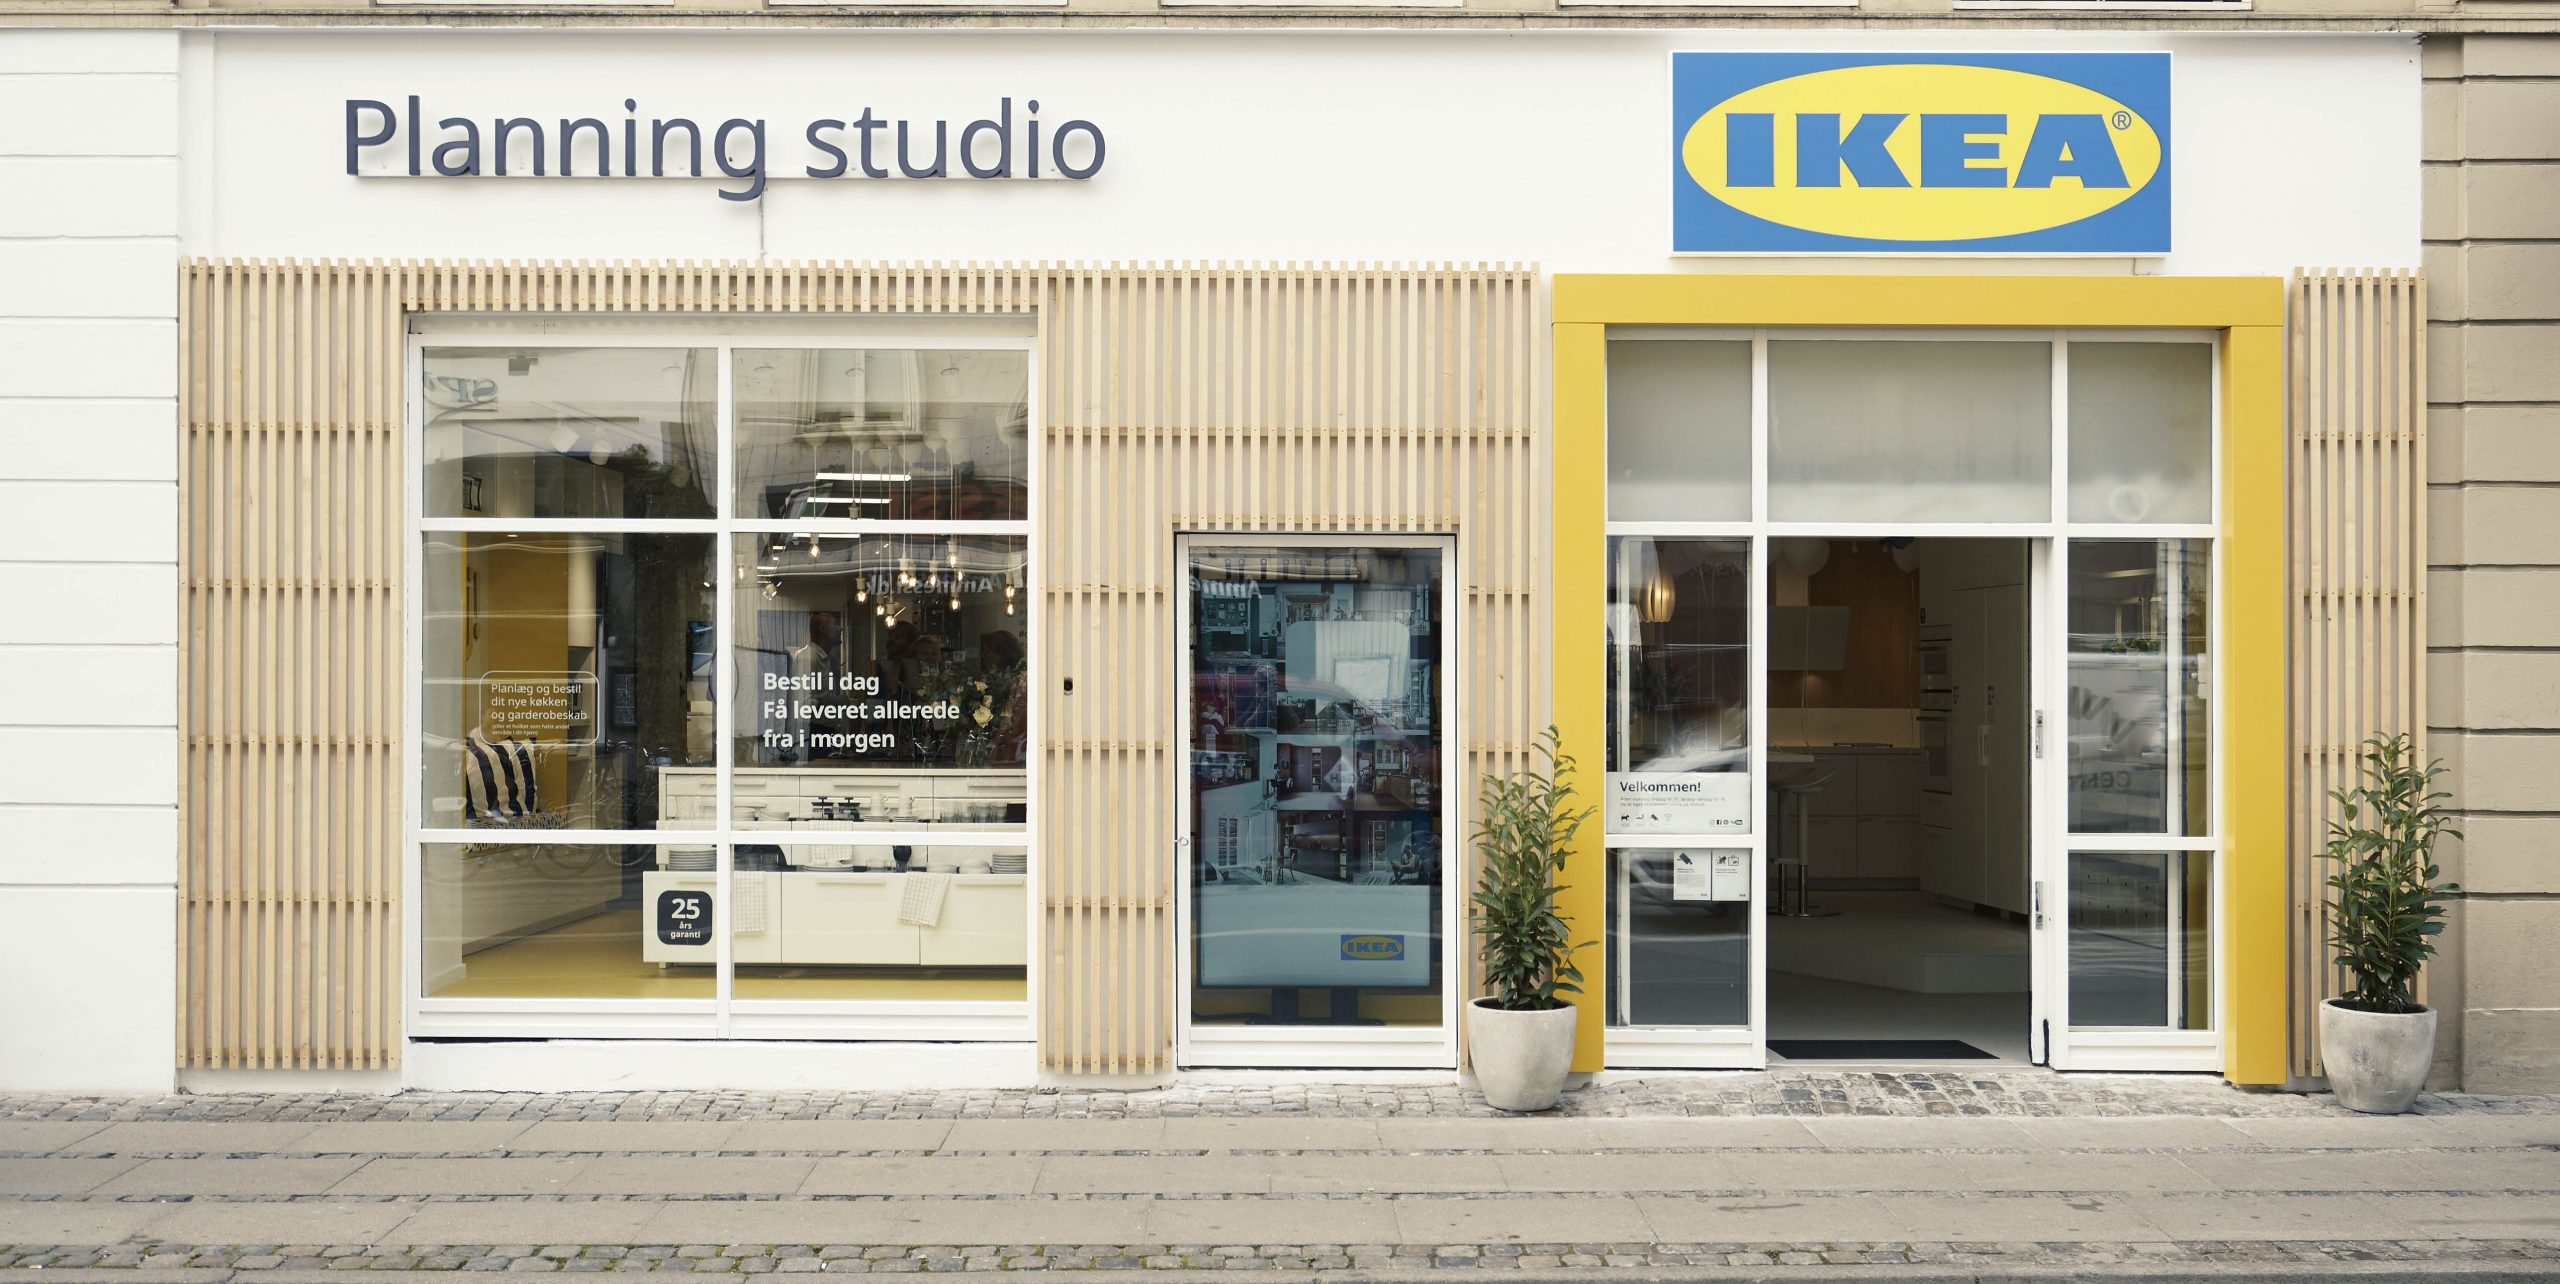 IKEA Planning studio